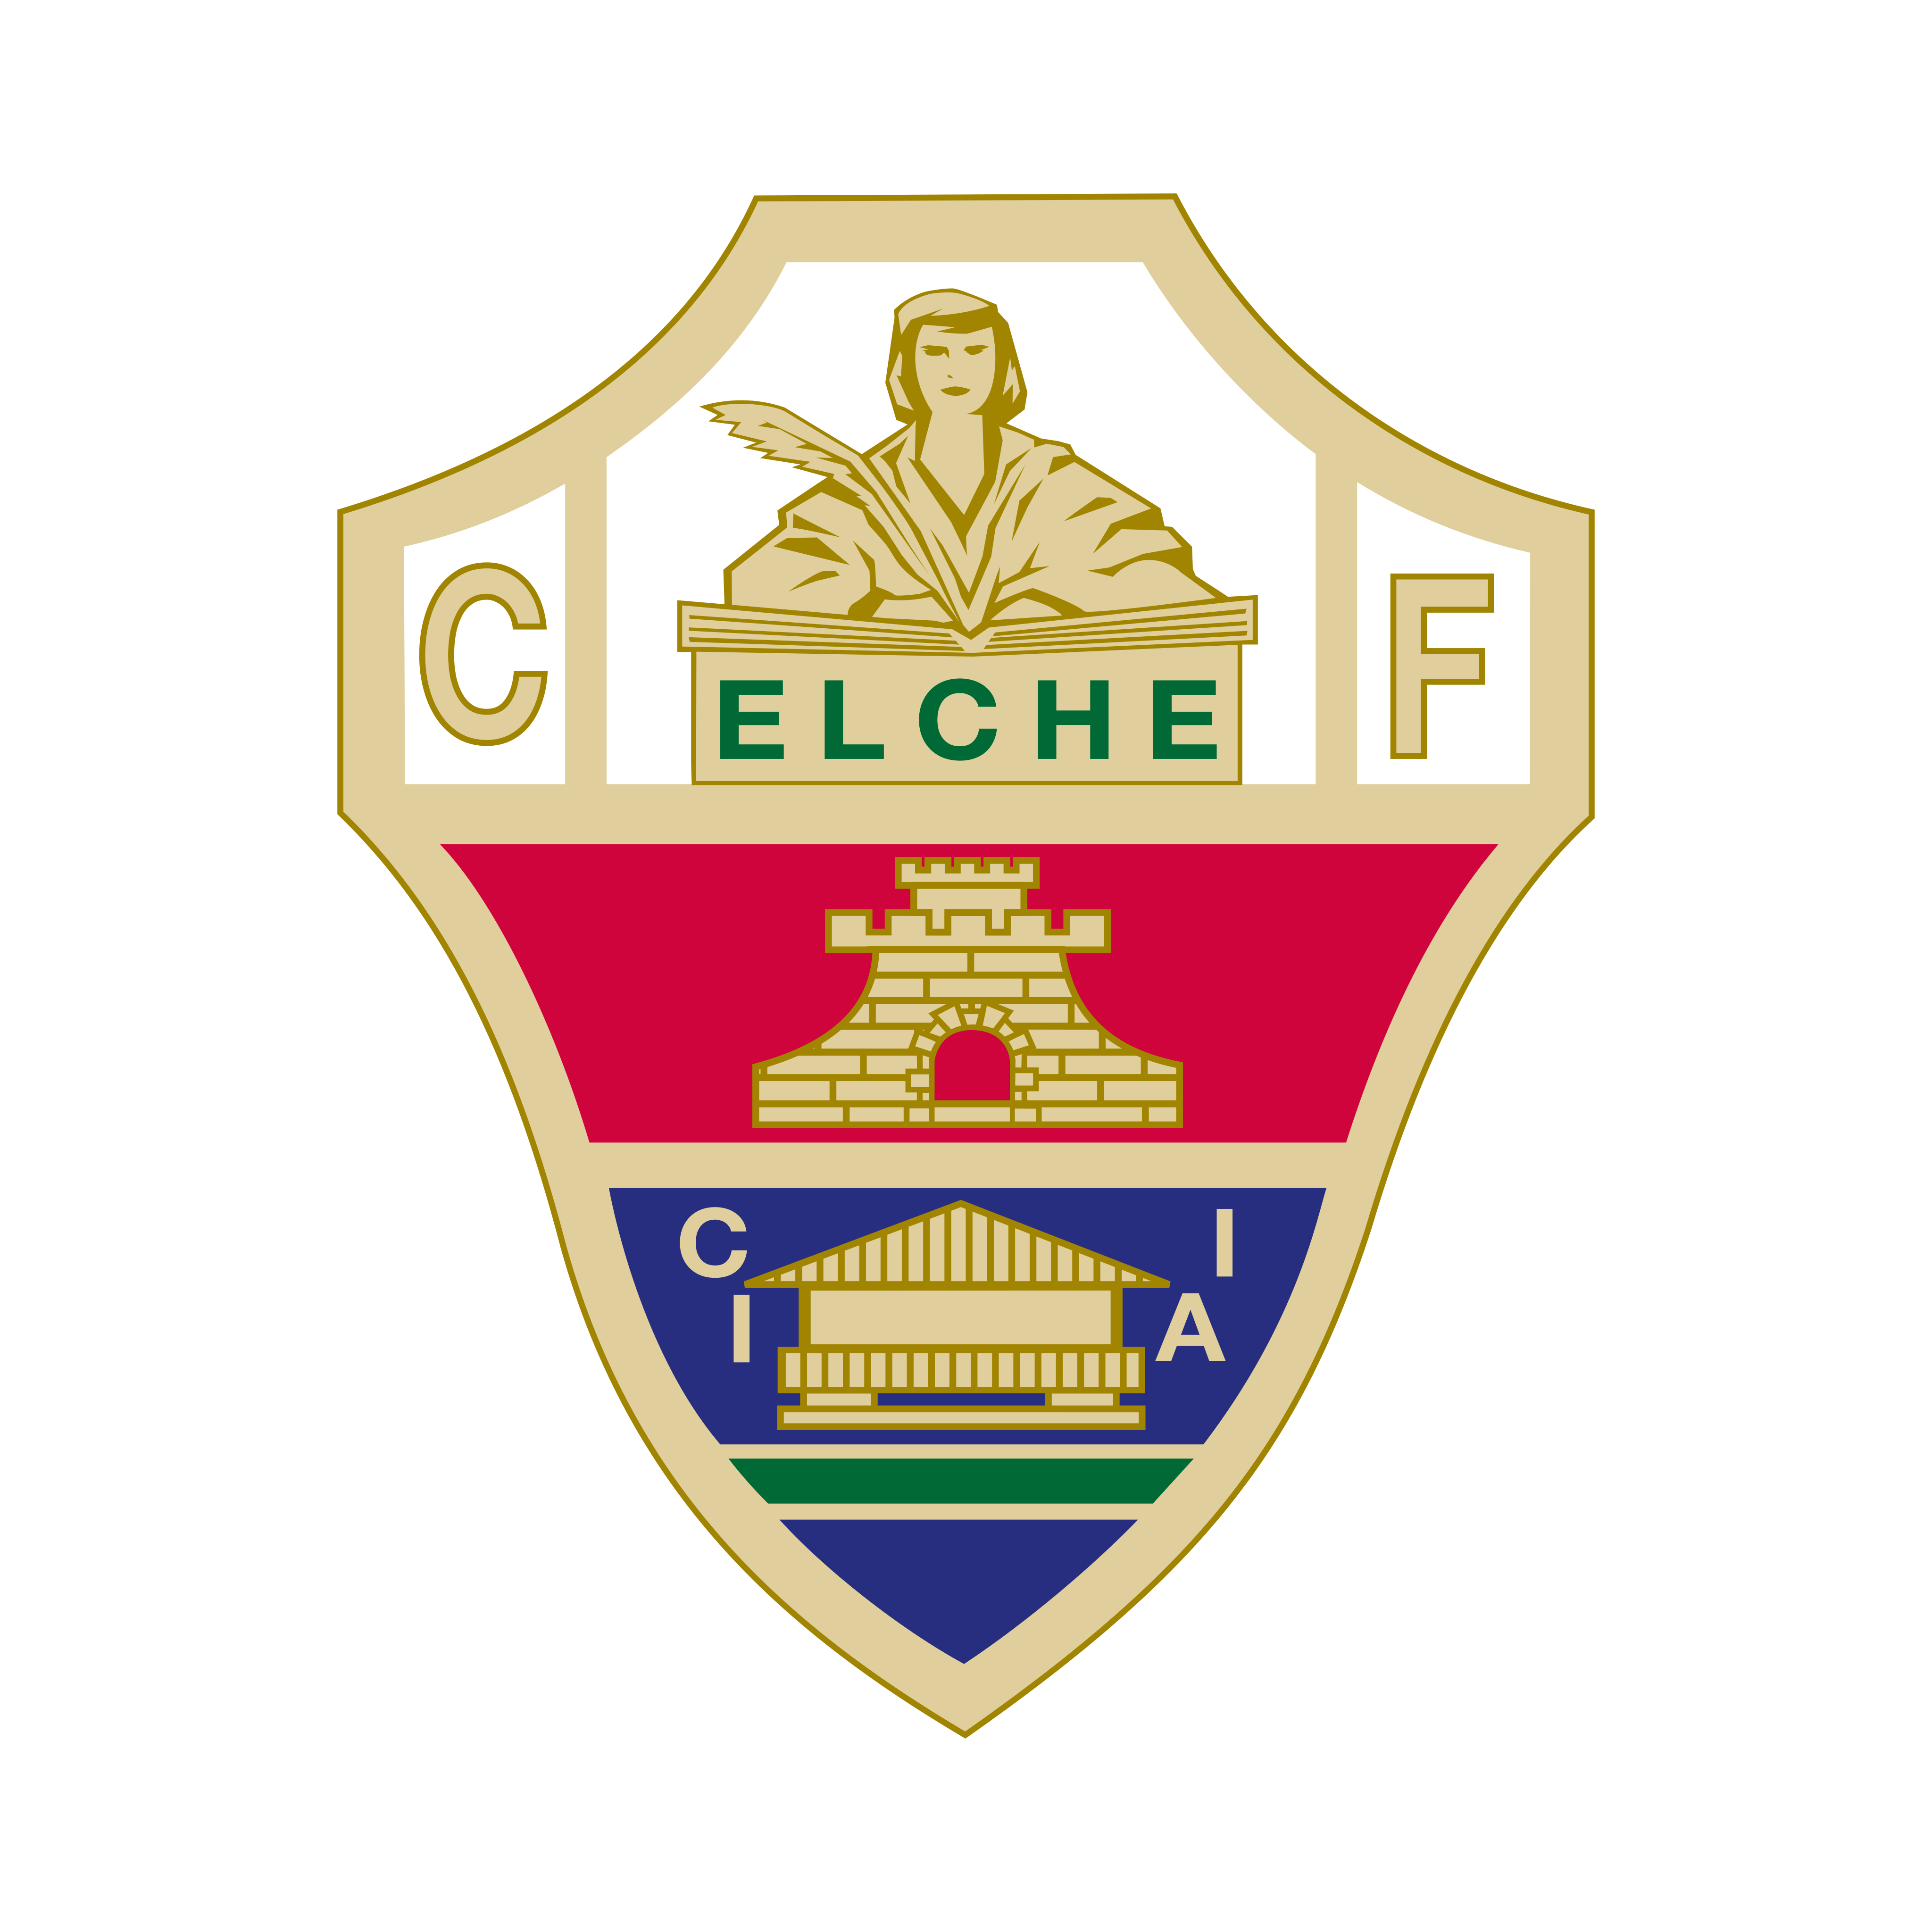 elche cf logo 0 - Elche CF Logo